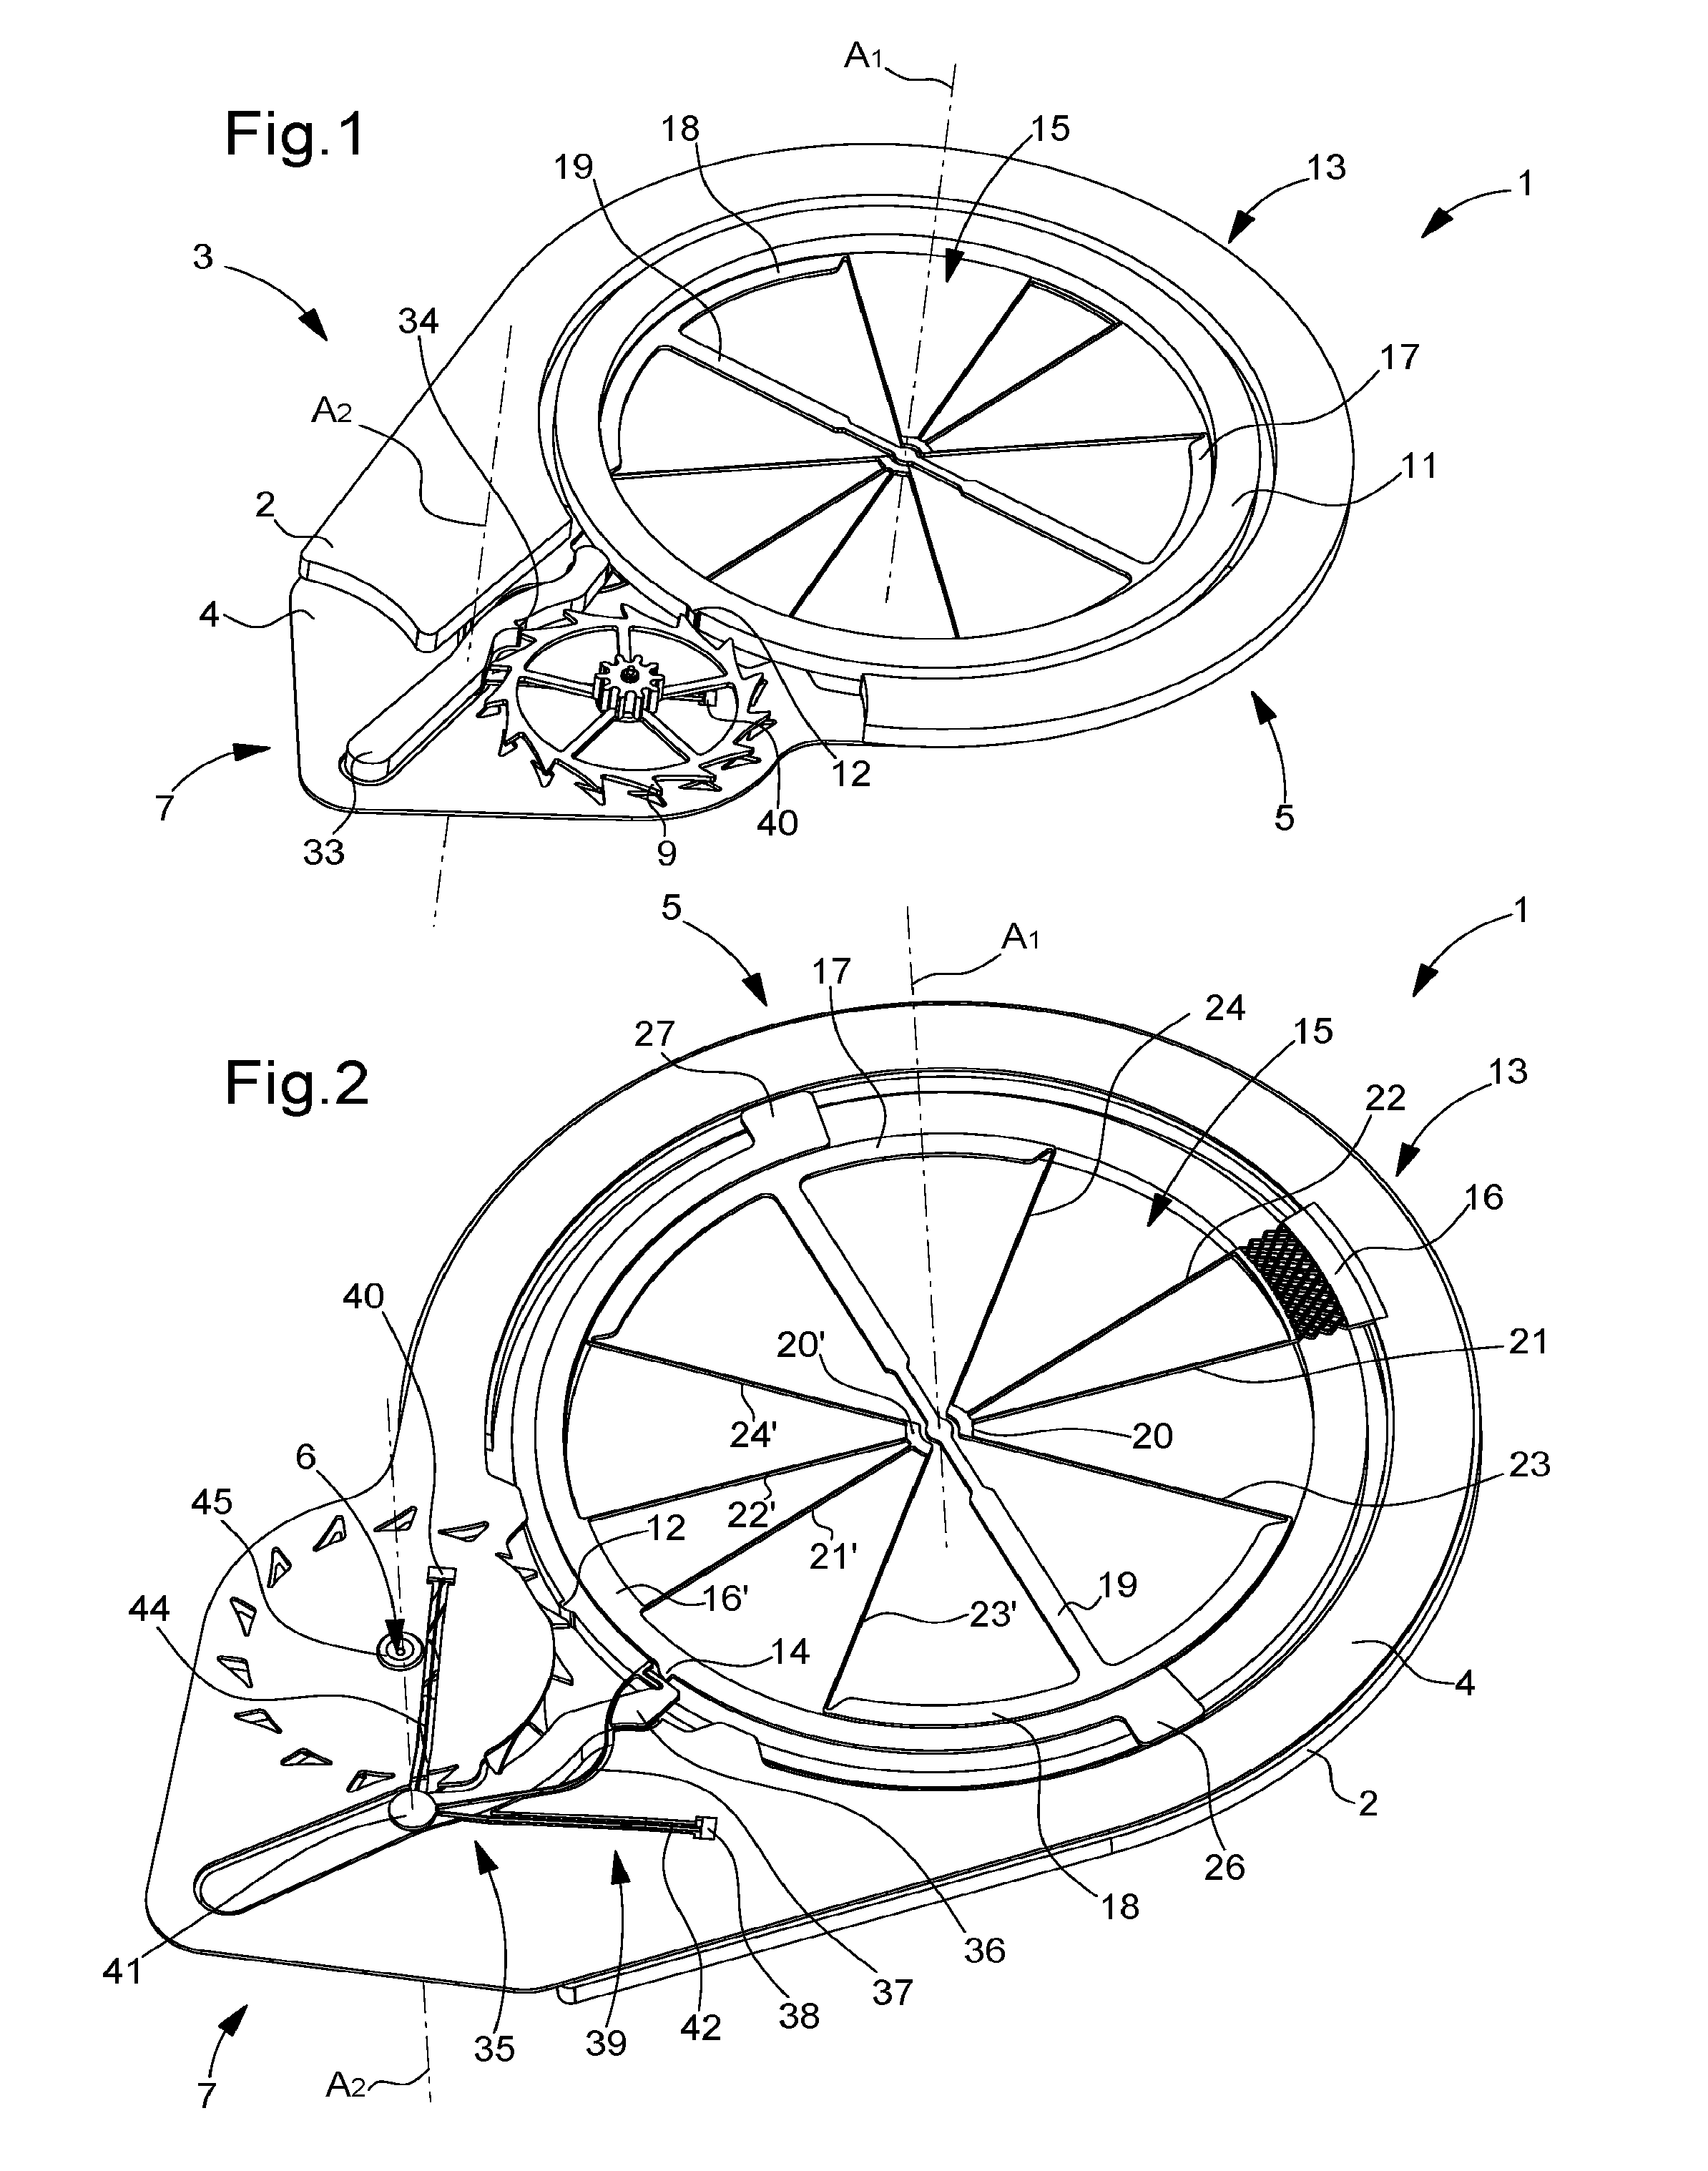 Oscillator with a detent escapement